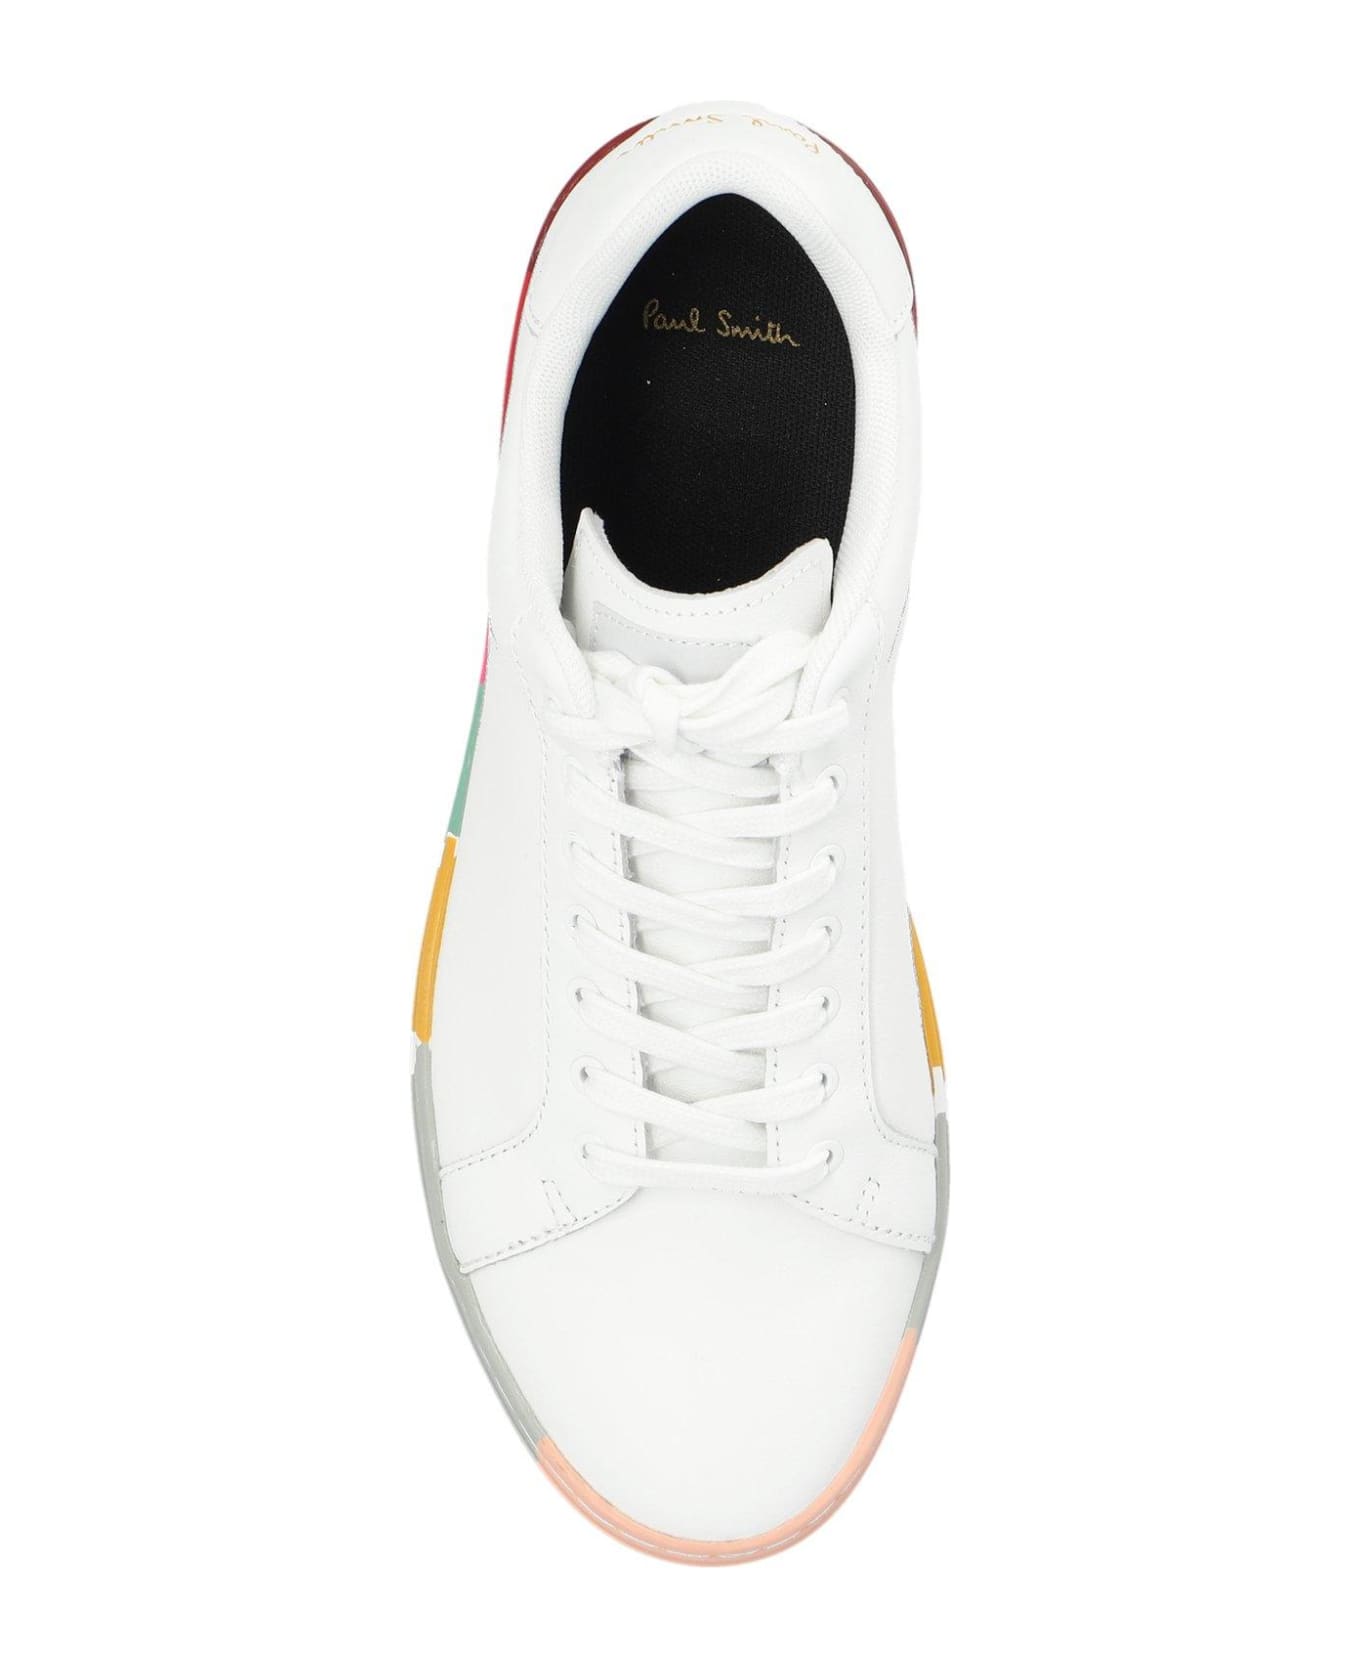 Paul Smith Lapin Sneakers - White